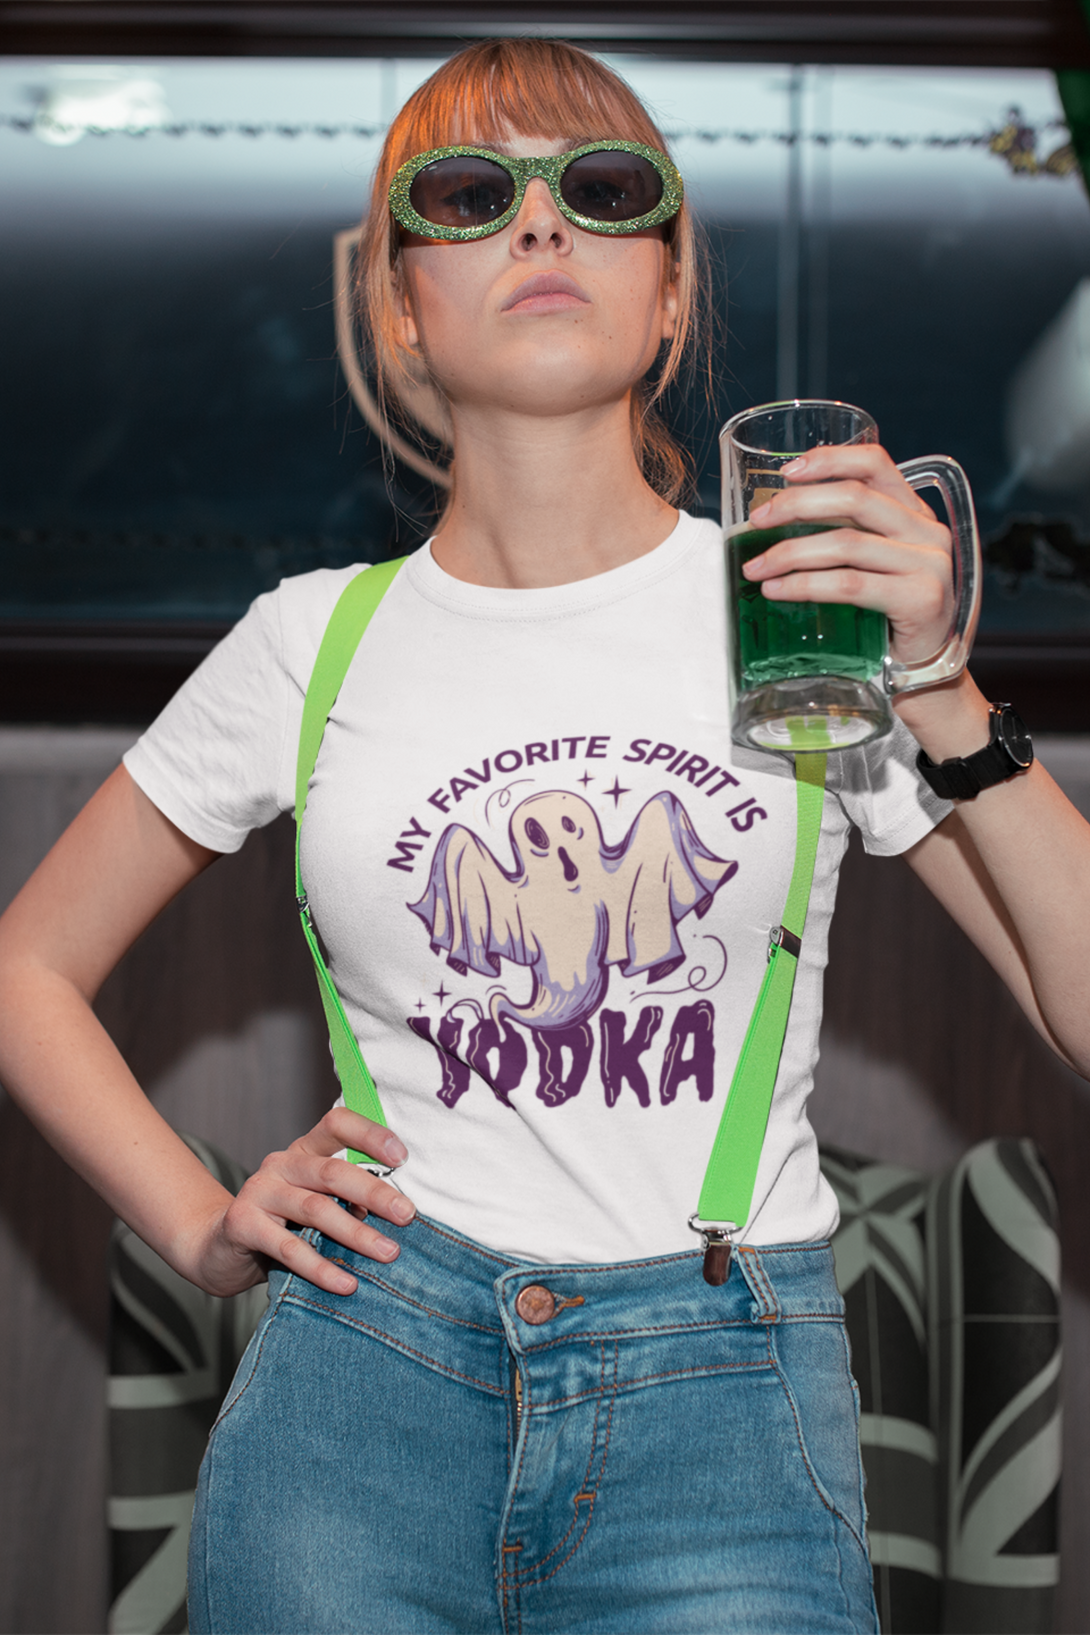 My Favourite Spirit Is Vodka Printed T-Shirt For Women - WowWaves - 2